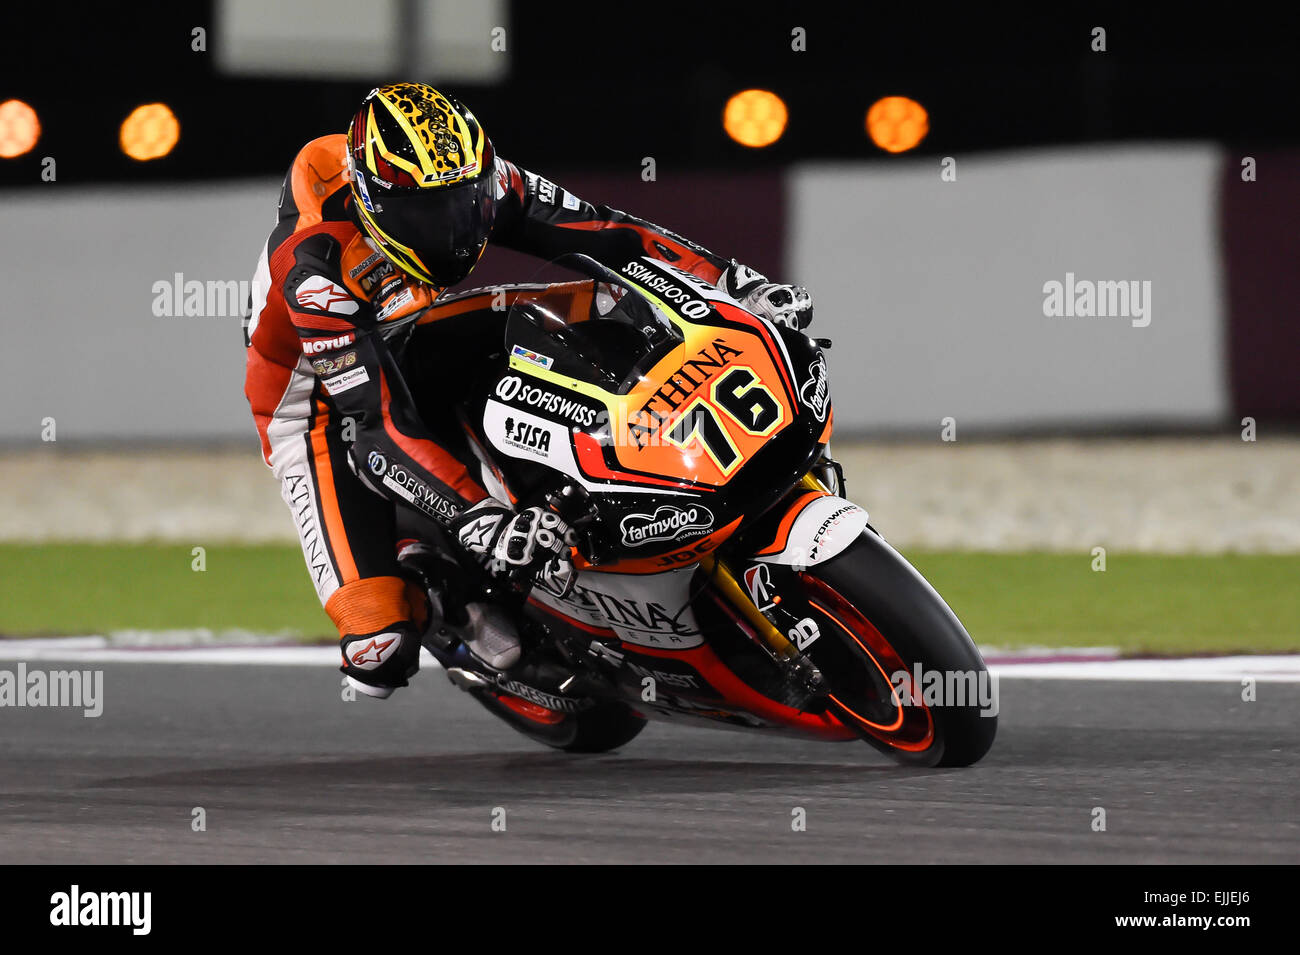 Losail Doha 27th Mar 15 Motogp Qatar Grand Prix Practice Stock Photo Alamy